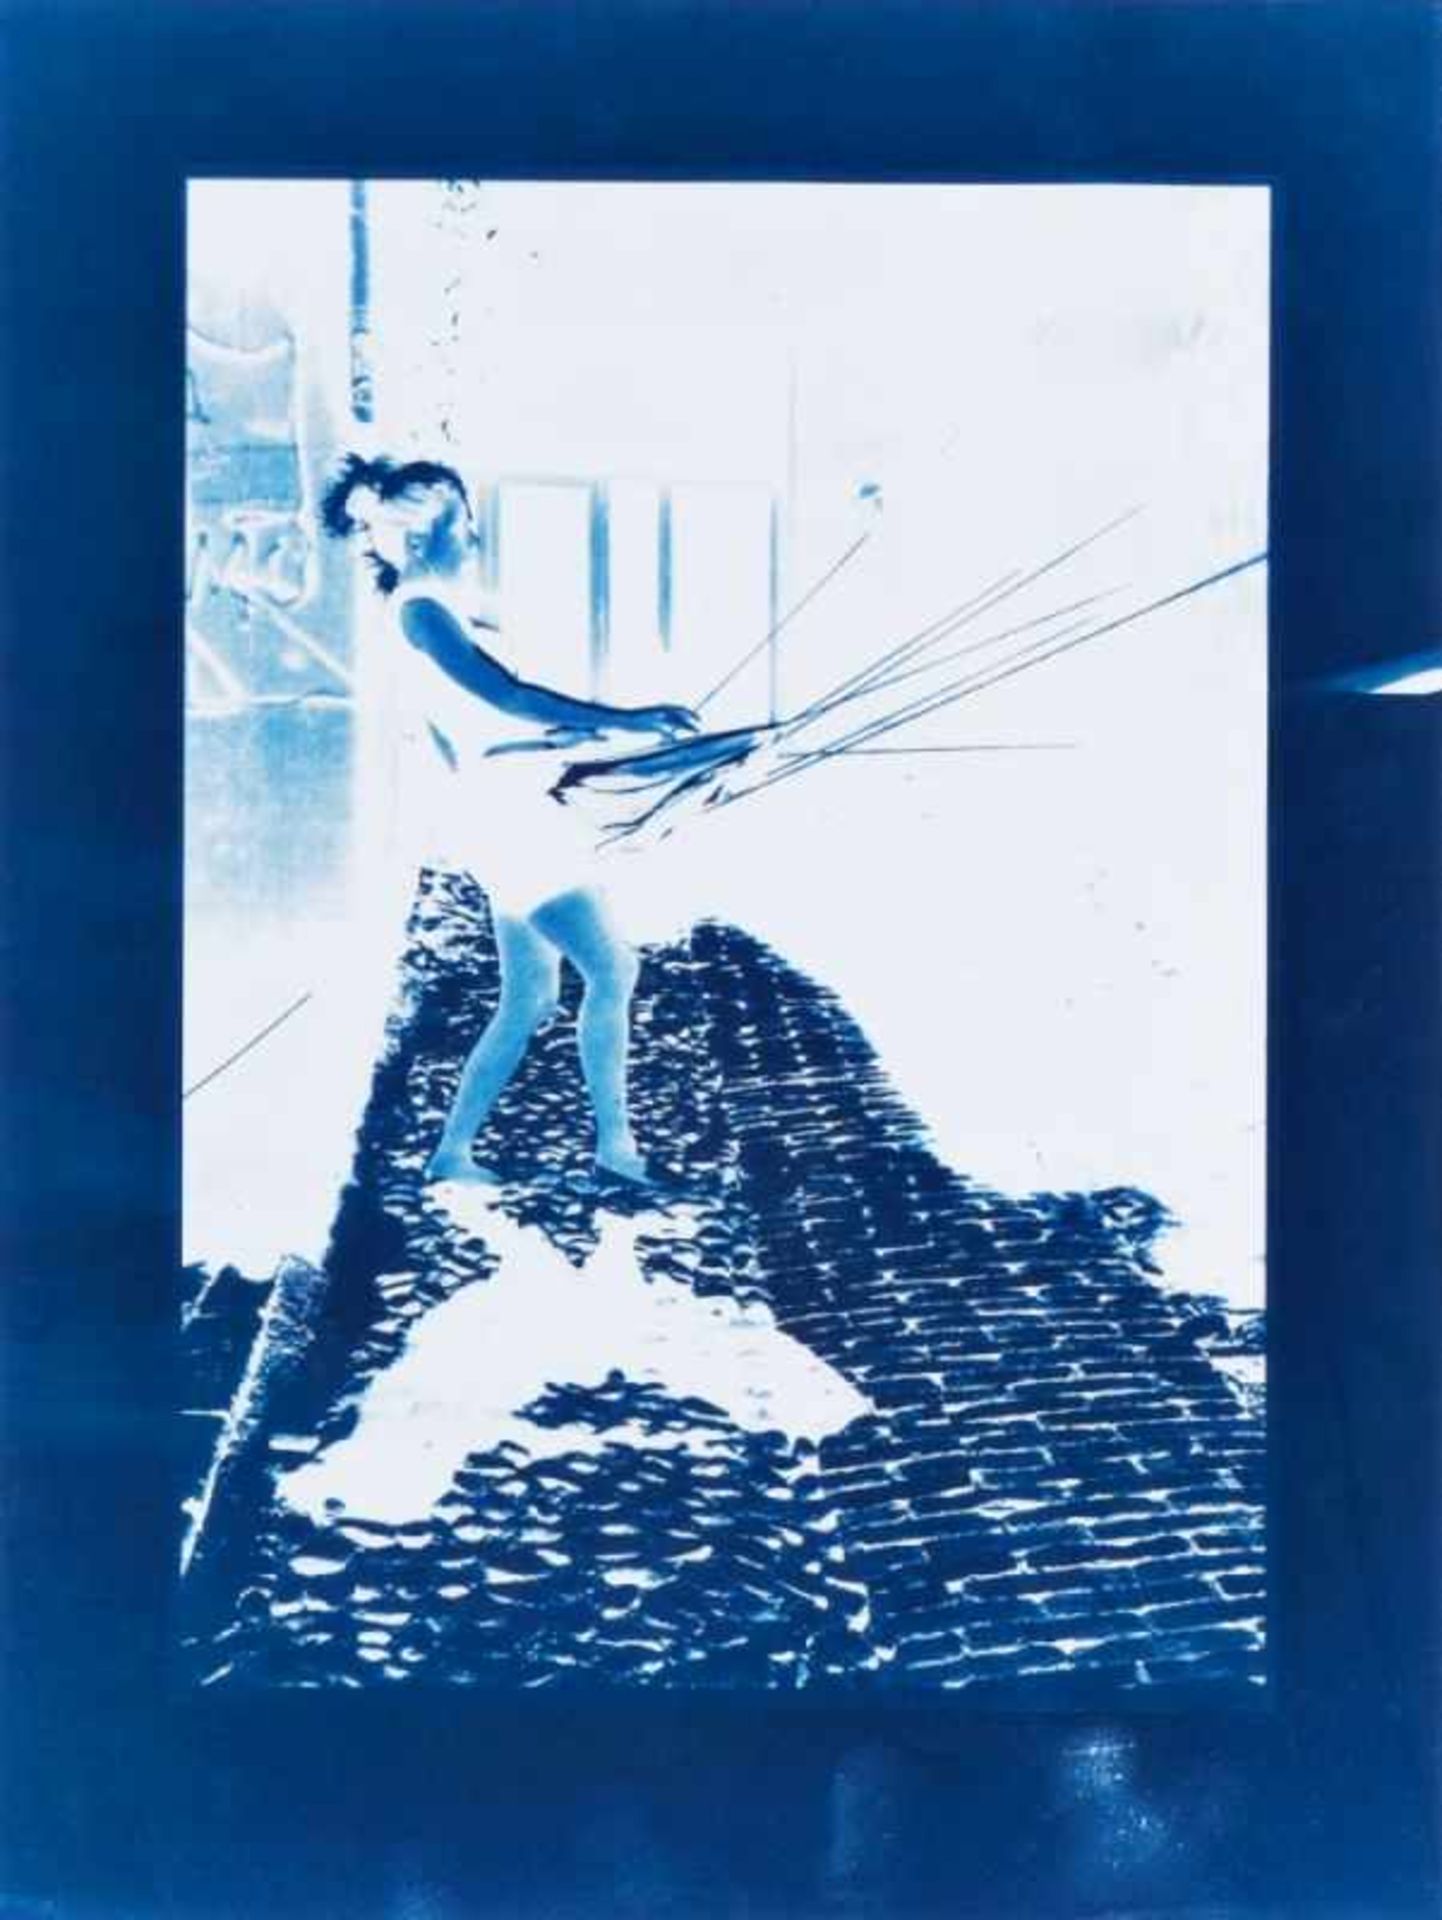 BIRGIT GRASCHOPF (1978 WIEN) GENOVAGEWITTER, 2015 Cyanotypie, 52 x 39 cm gerahmt, Maß mit Rahmen: 65